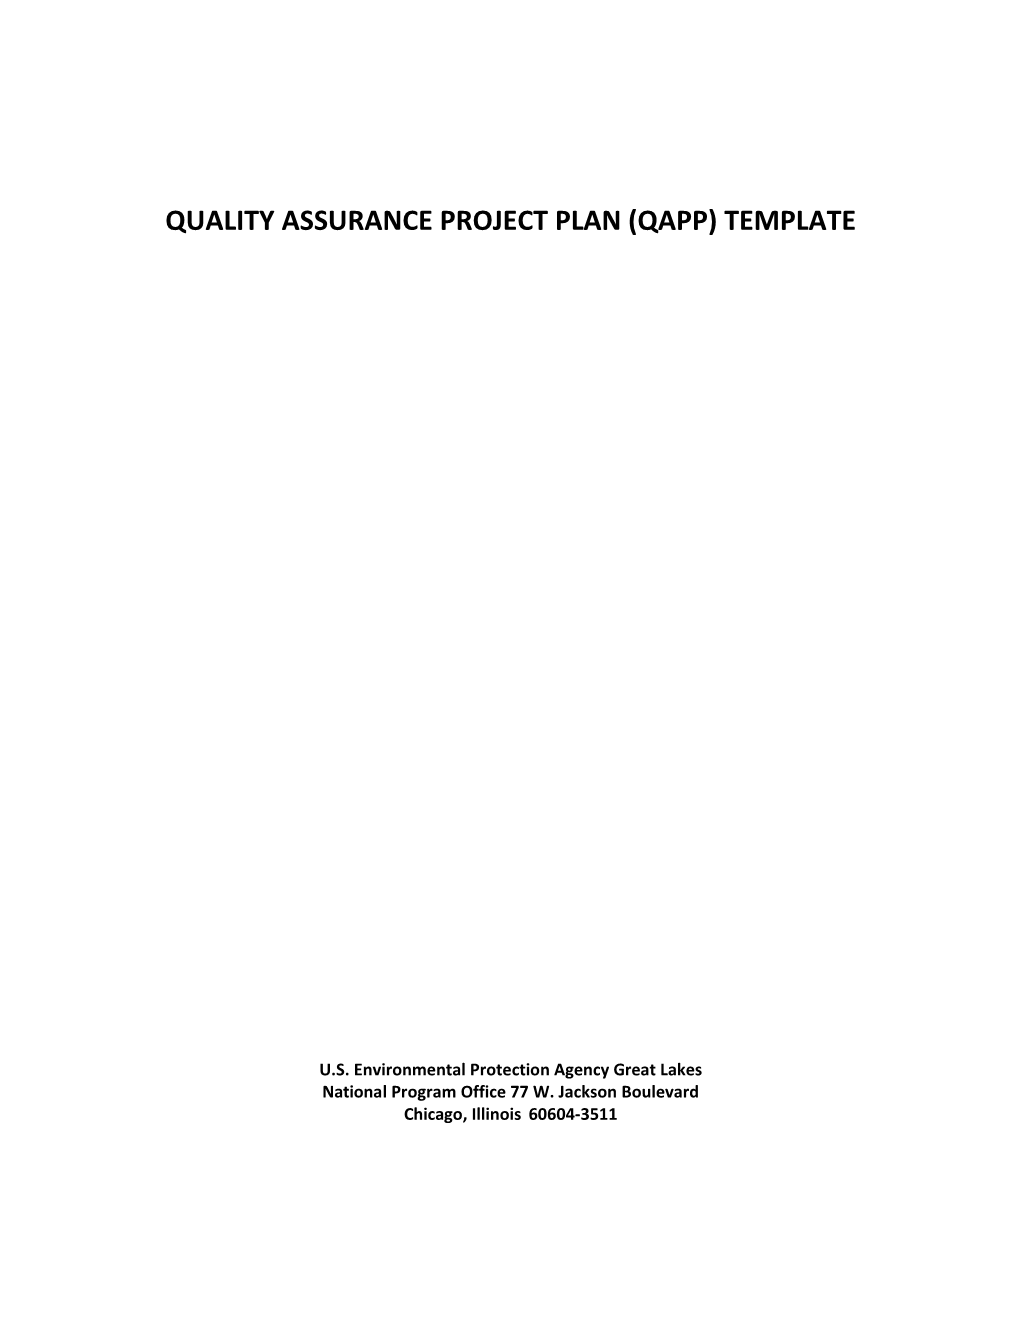 Qualityassuranceprojectplan(Qapp)Template